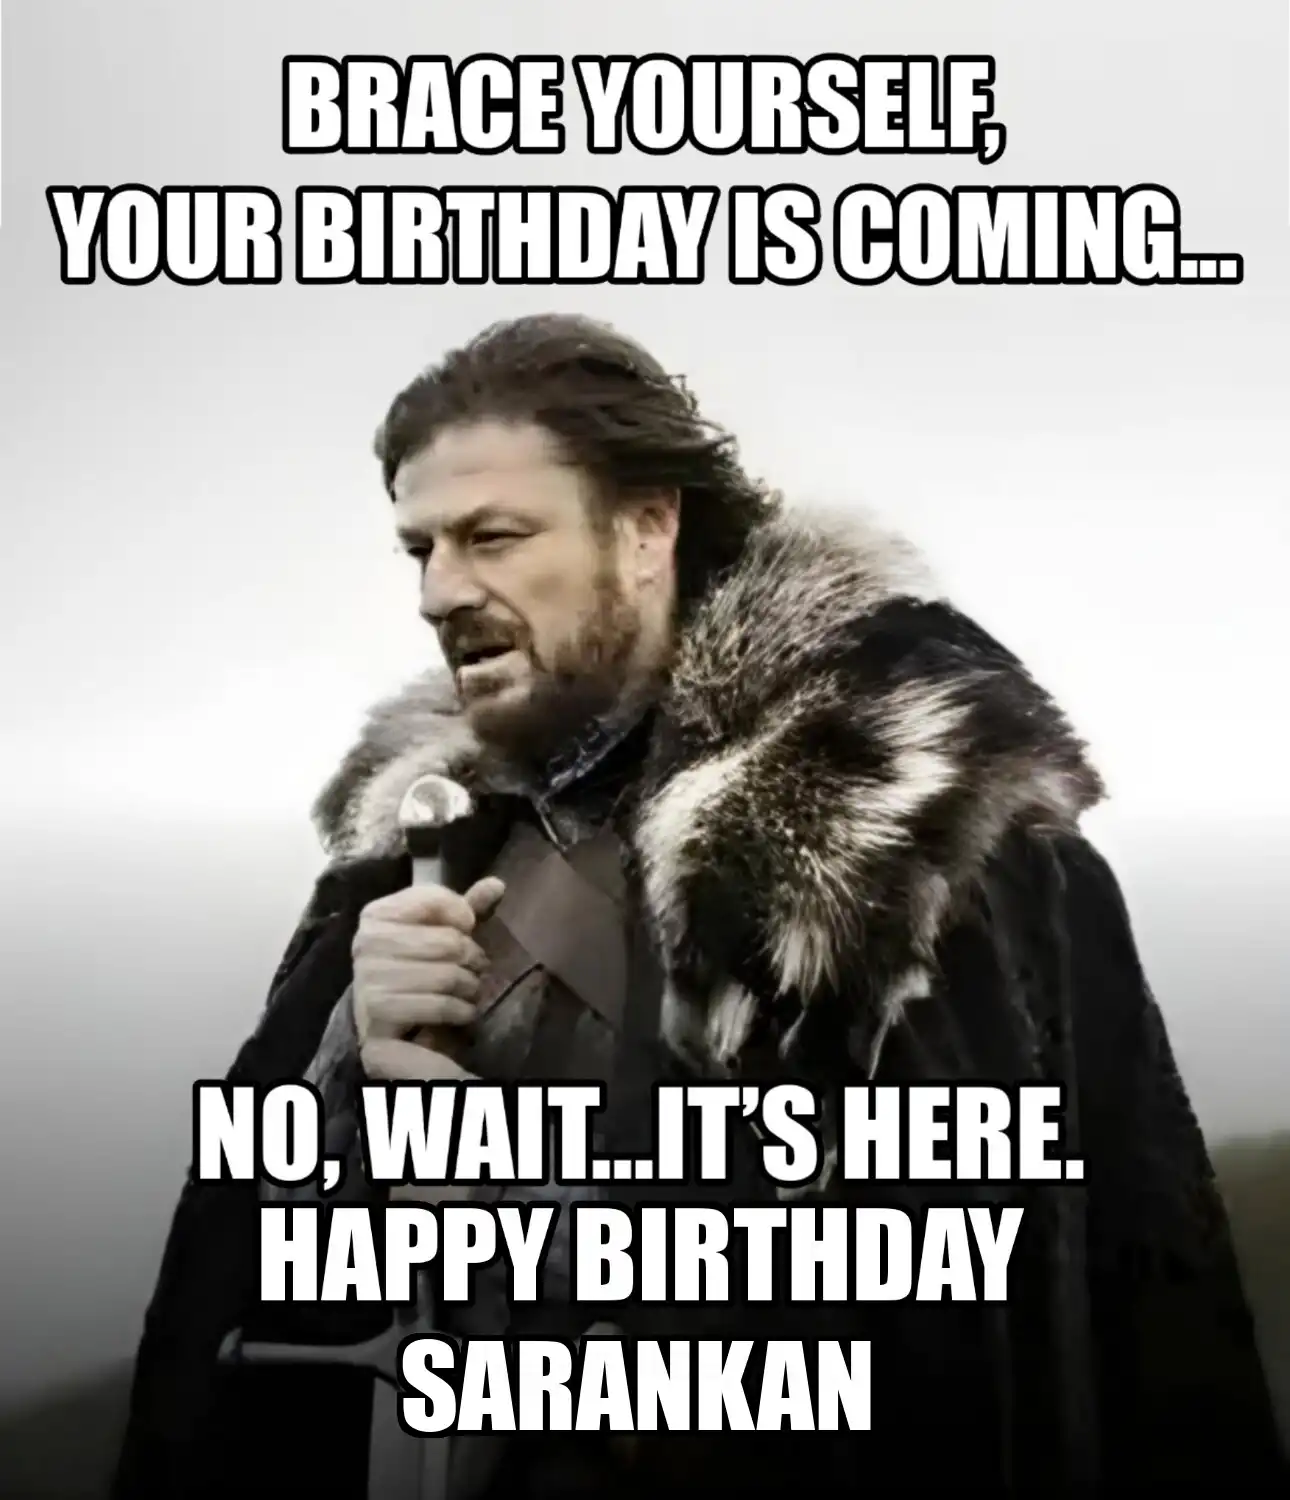 Happy Birthday Sarankan Brace Yourself Your Birthday Is Coming Meme